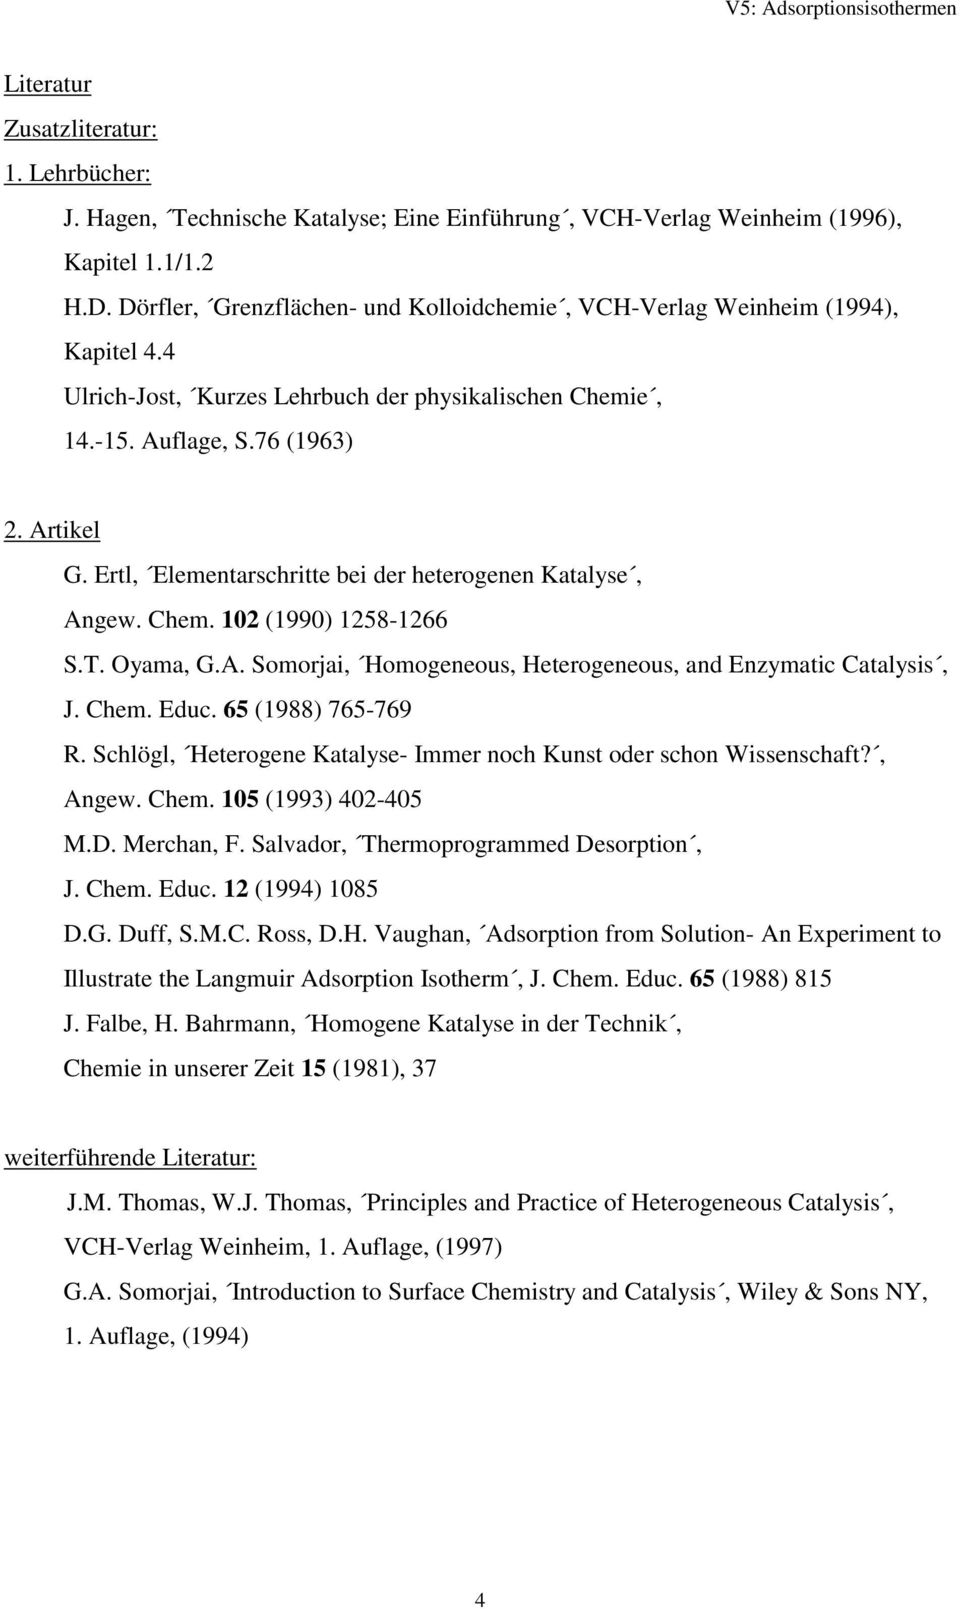 Ertl, Eleentarschritte bei der heterogenen Katalyse, Angew. Che. 102 (1990) 1258-1266 S.T. Oyaa, G.A. Soorjai, Hoogeneous, Heterogeneous, and Enzyatic Catalysis, J. Che. Educ. 65 (1988) 765-769 R.